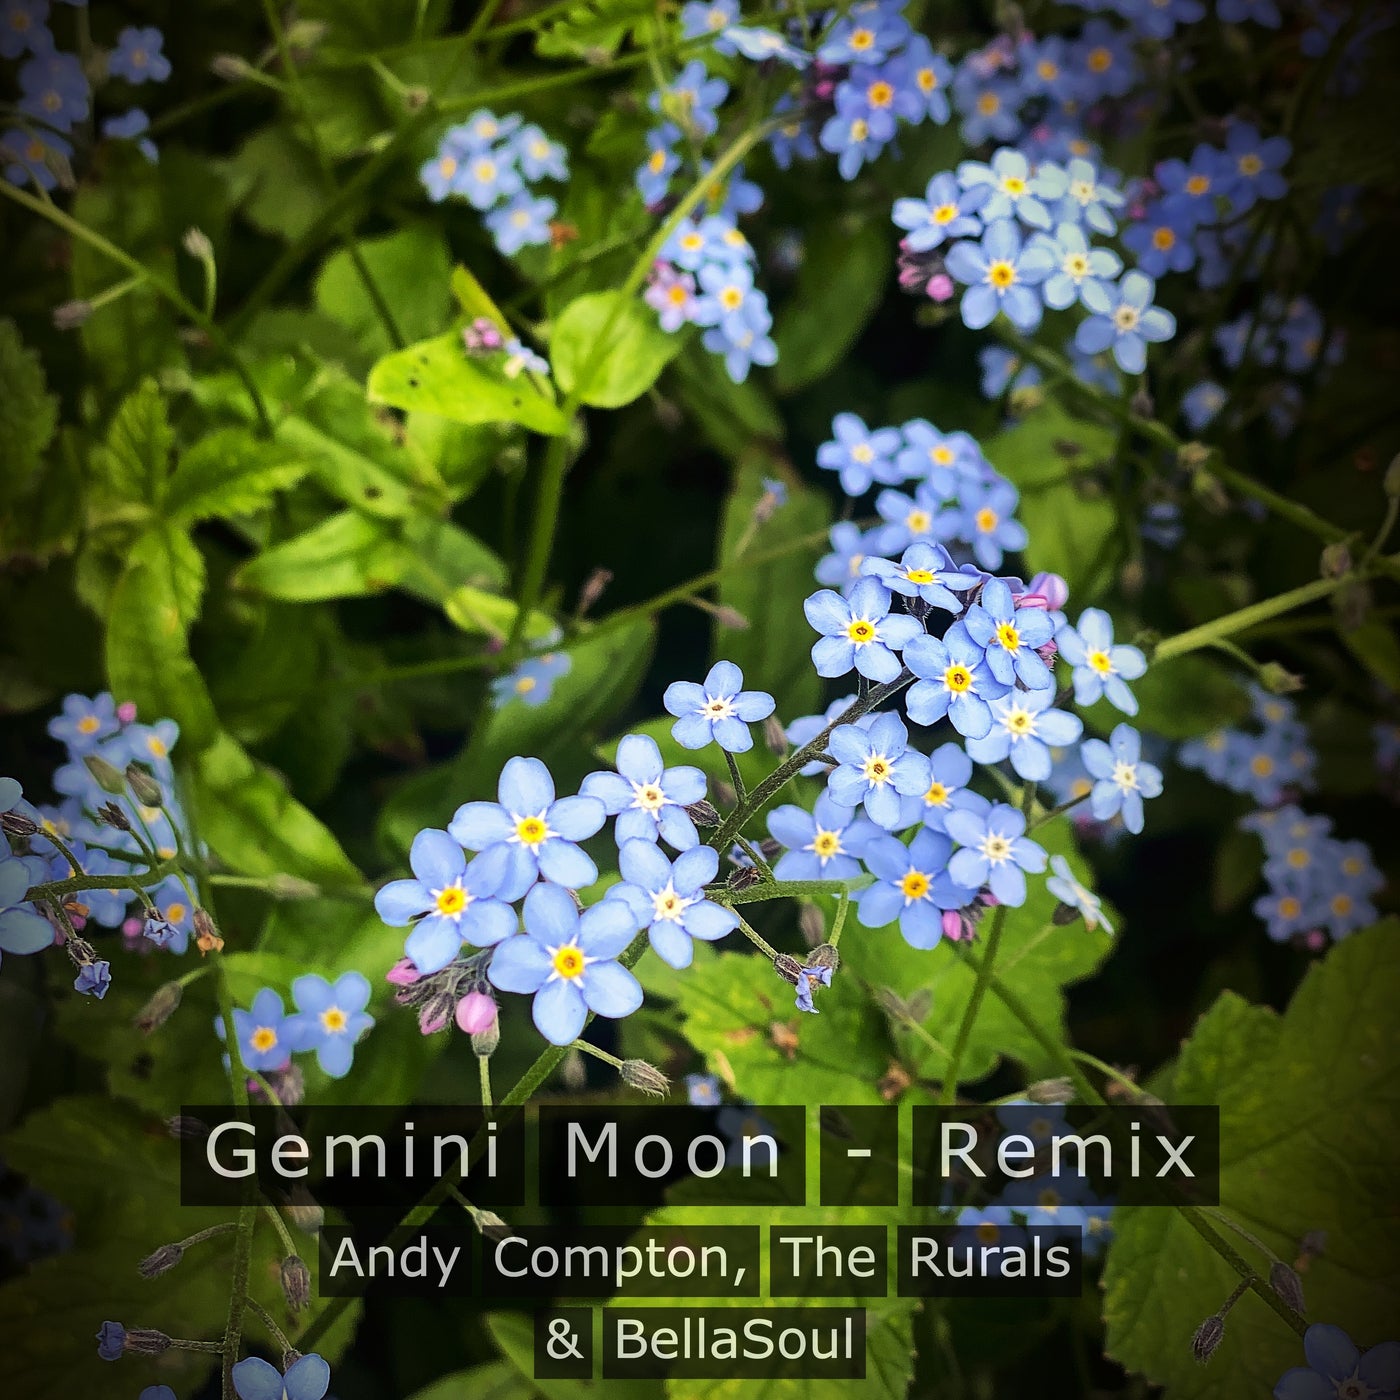 Gemini Moon - Remix